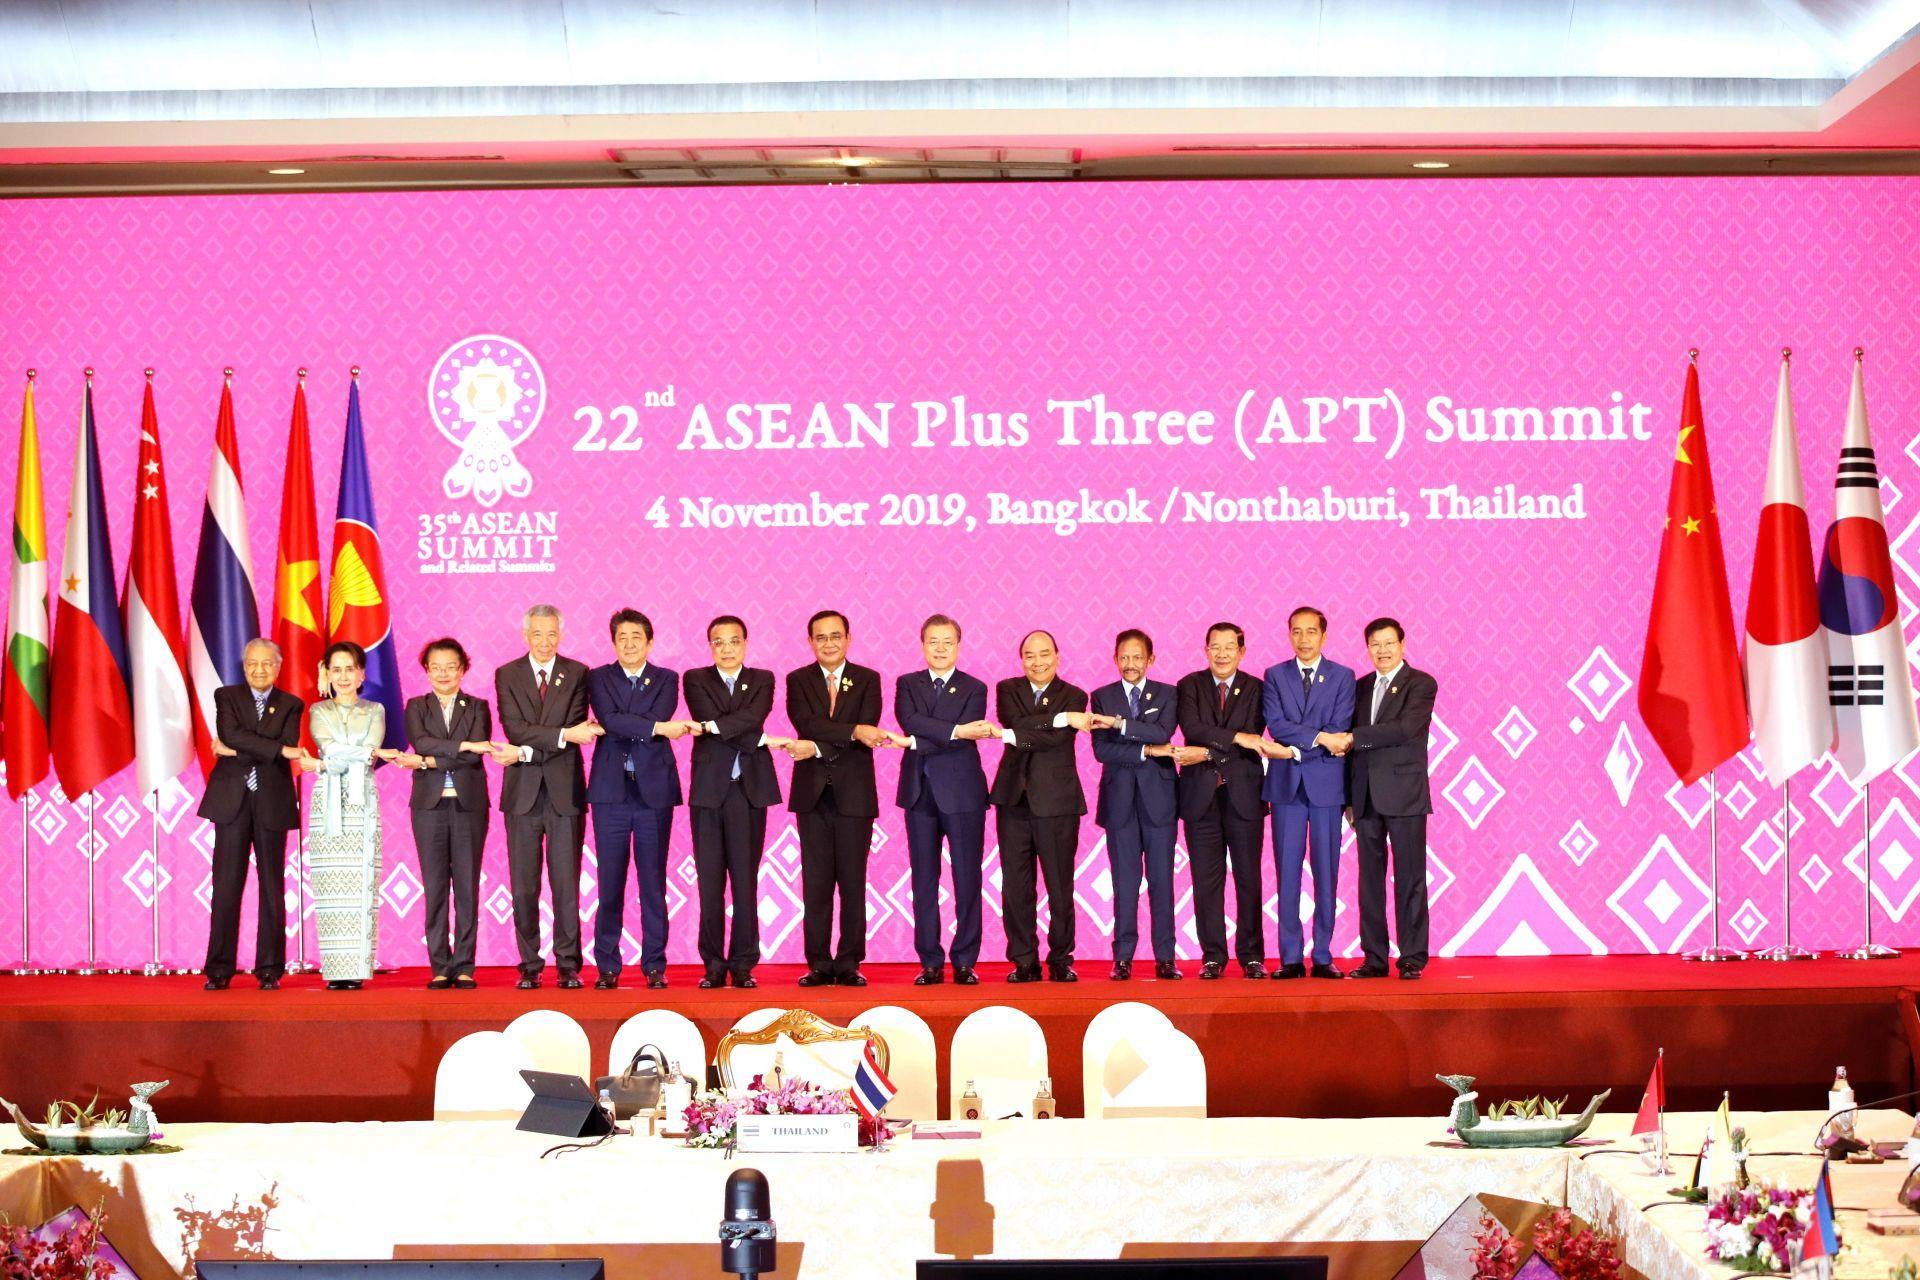 ASEAN + 3 Business Forum (Japan, Korea, India) on October 2, 2020